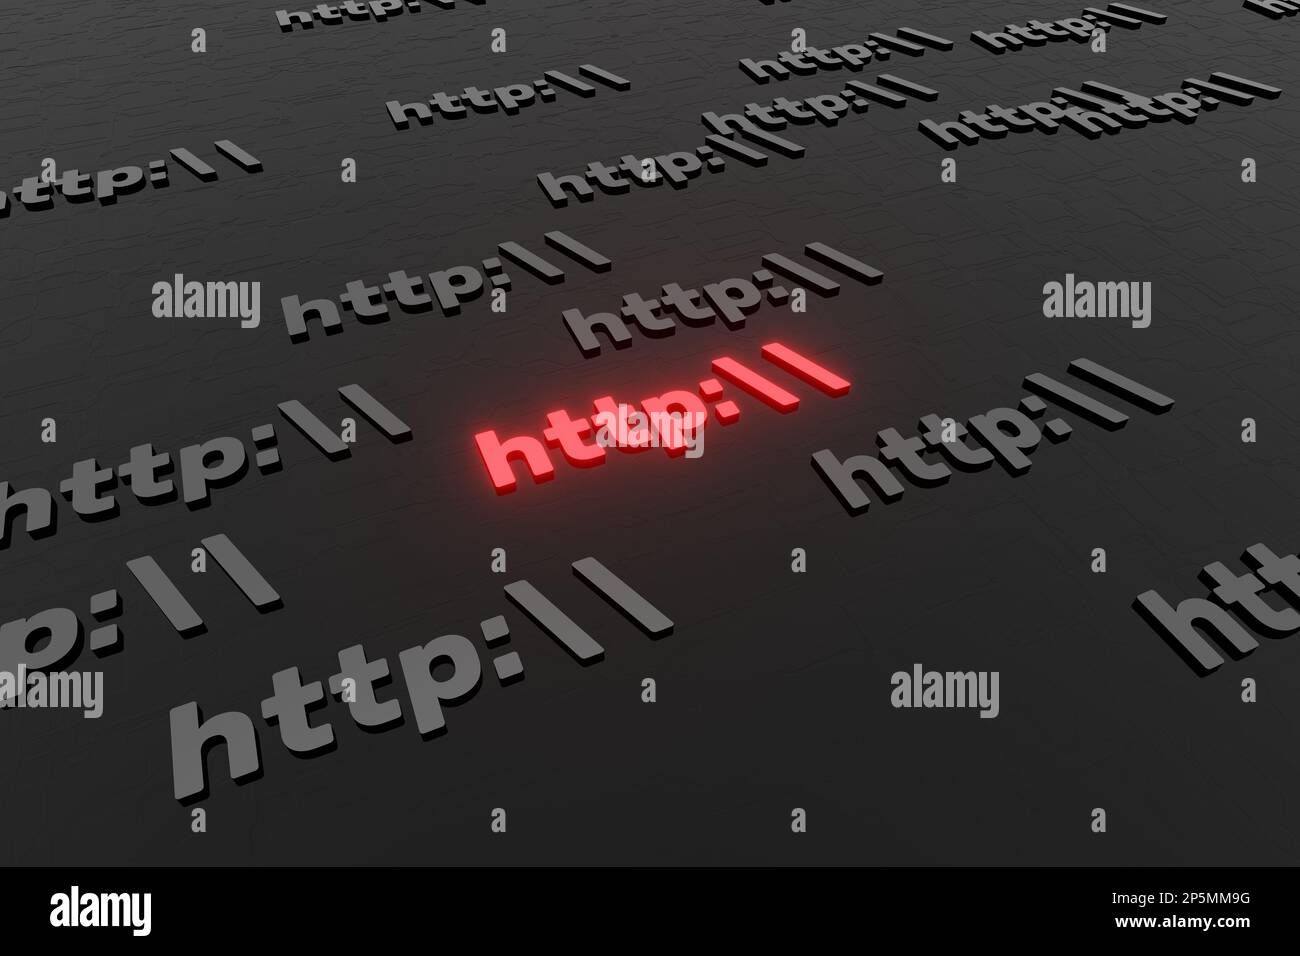 Http symbol sign on black background 3d render. Hypertext transfer protocol secure web 3 Stock Photo